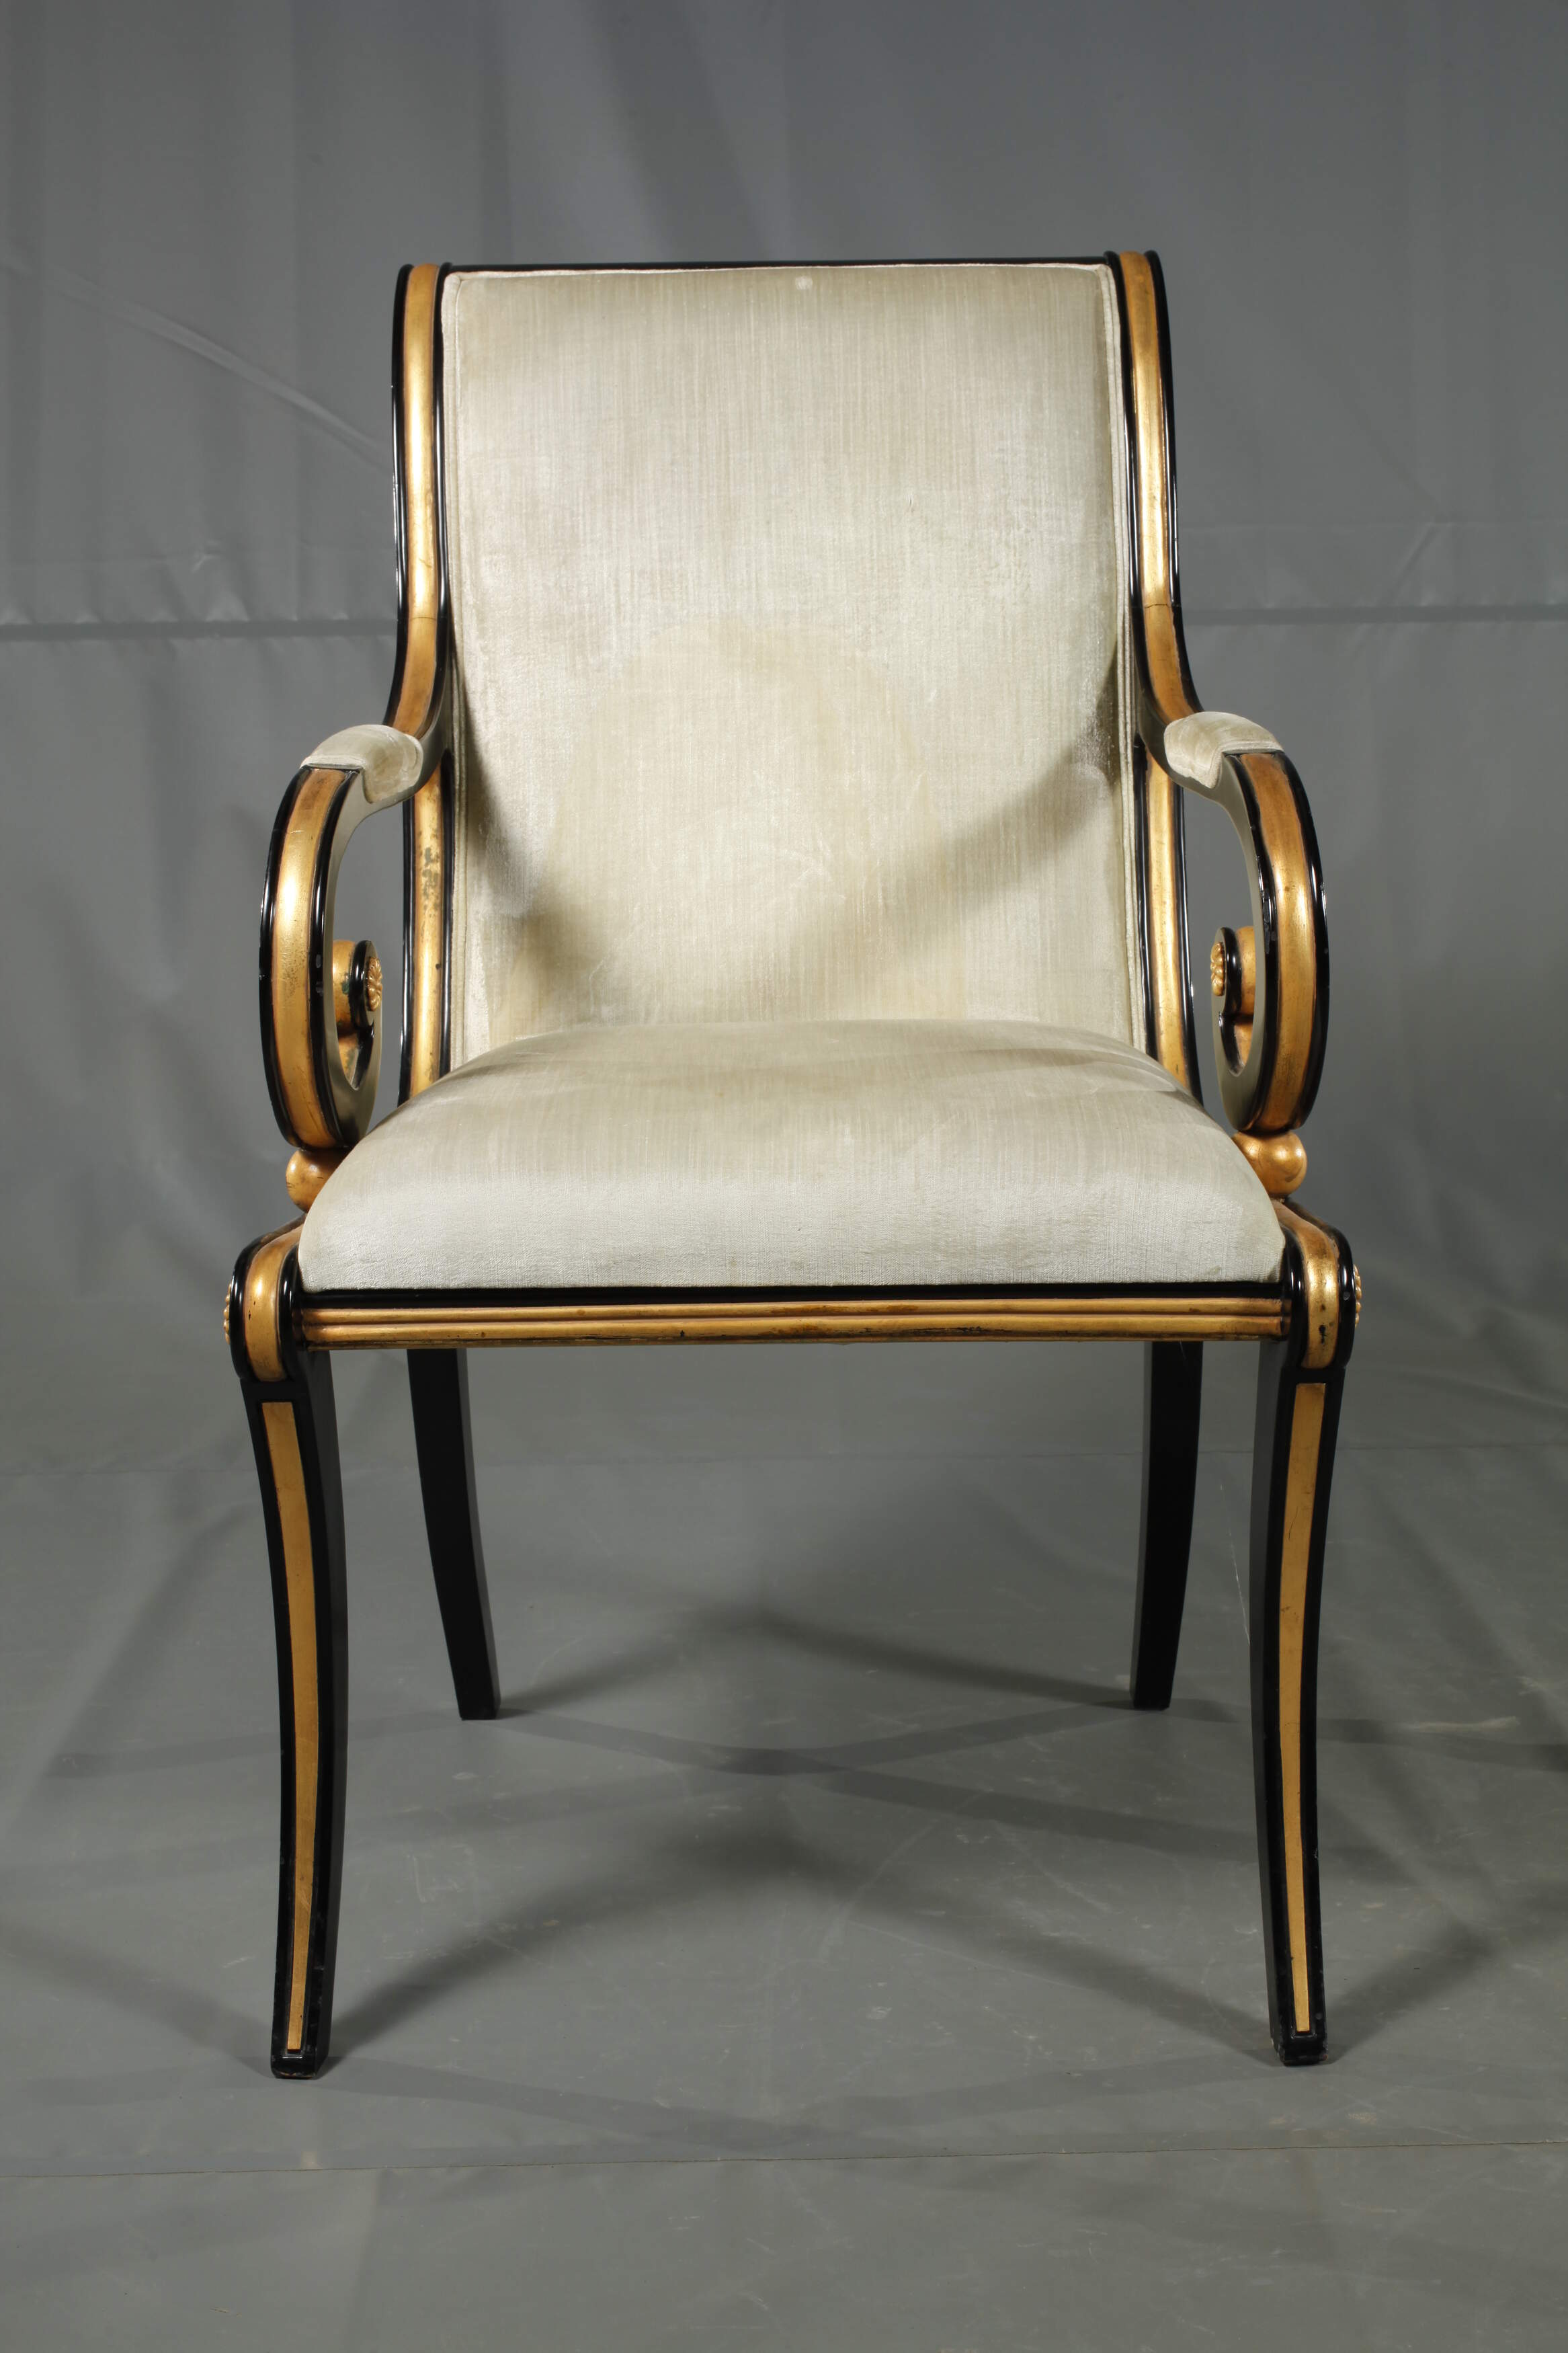 Two armchairs in Biedermeier style - Image 3 of 5